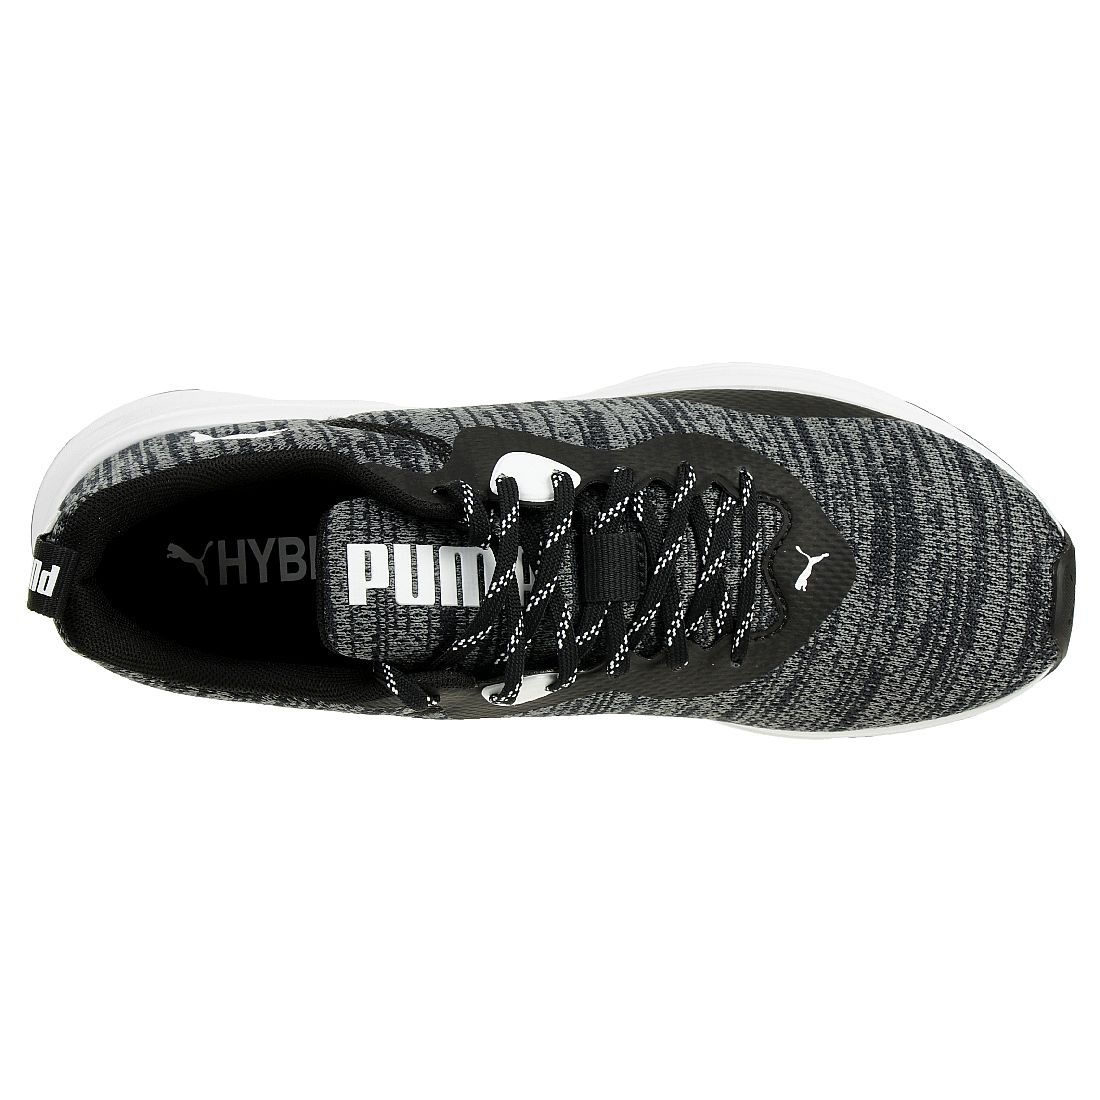 Puma Hybrid Fuego Knit  Joggingschuhe Herren Fitnessschuhe 192955 01